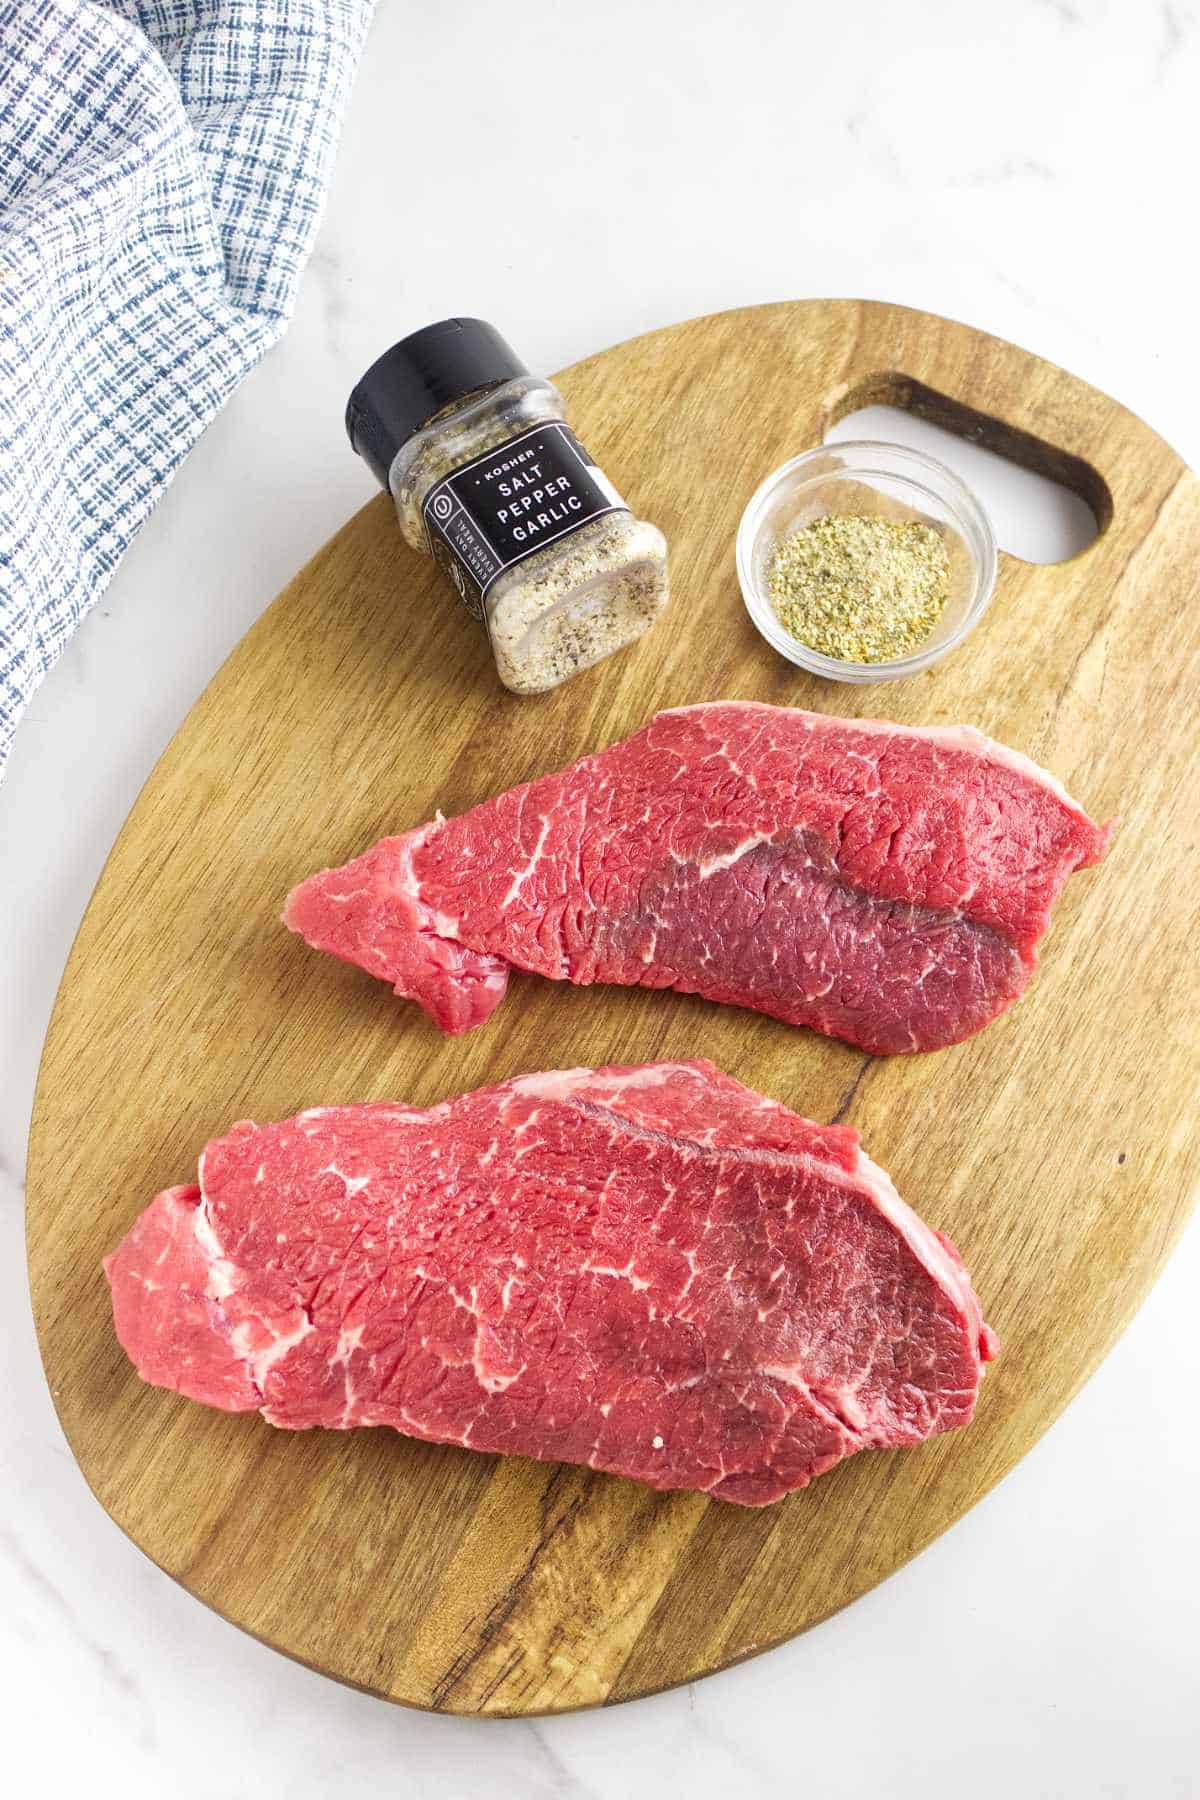 steaks on a wooden cutting board with seasonings.